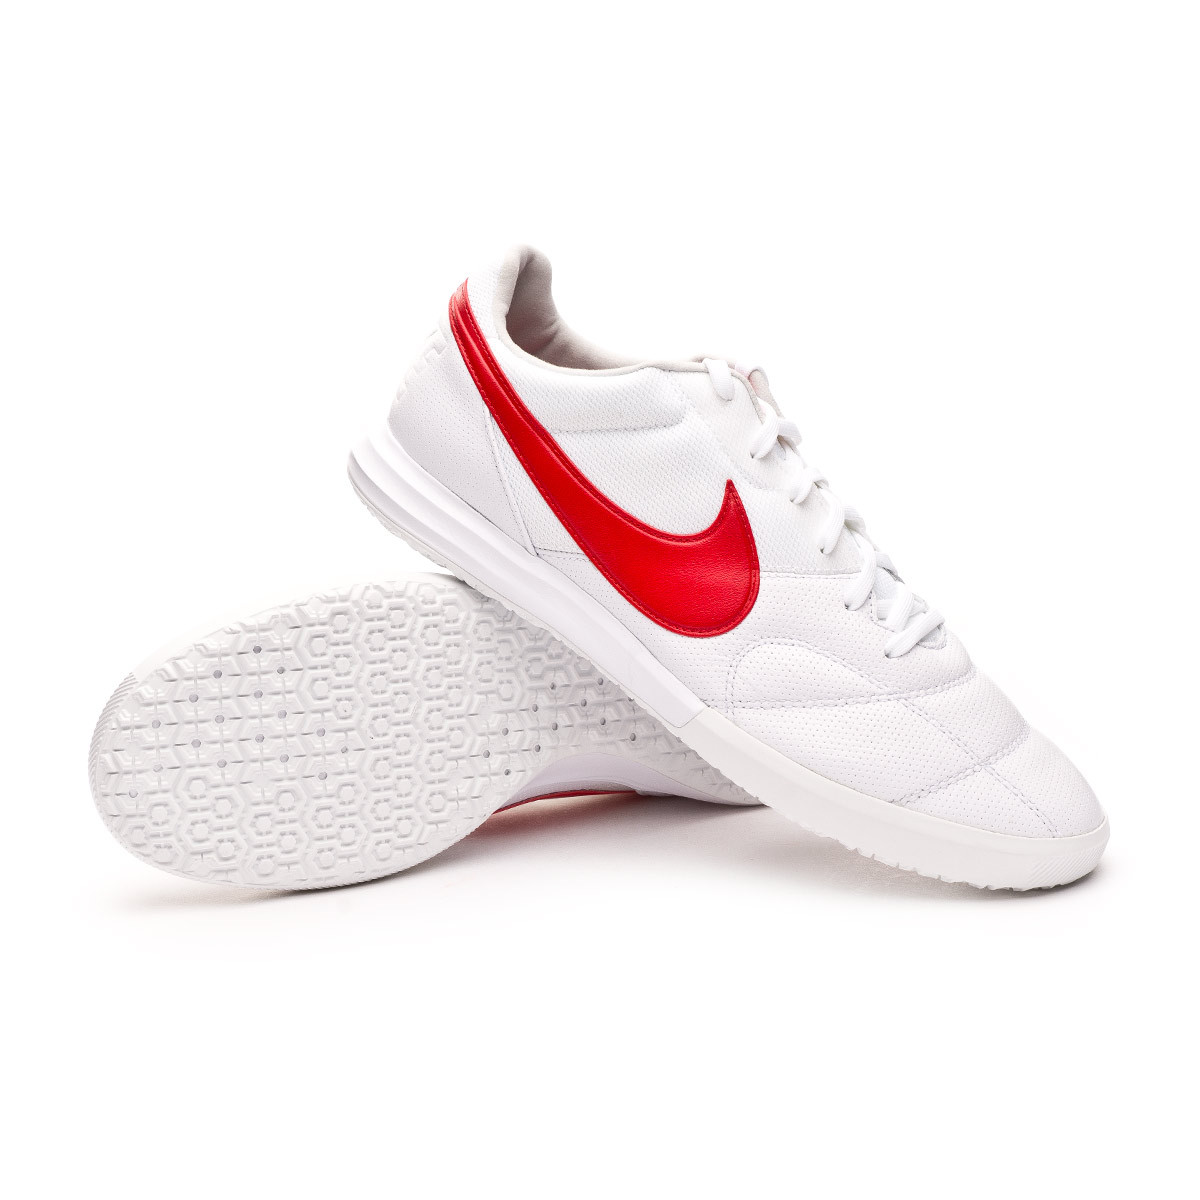 Futsal Boot Nike Tiempo Premier II Sala White-University red-Photon dust -  Football store Fútbol Emotion